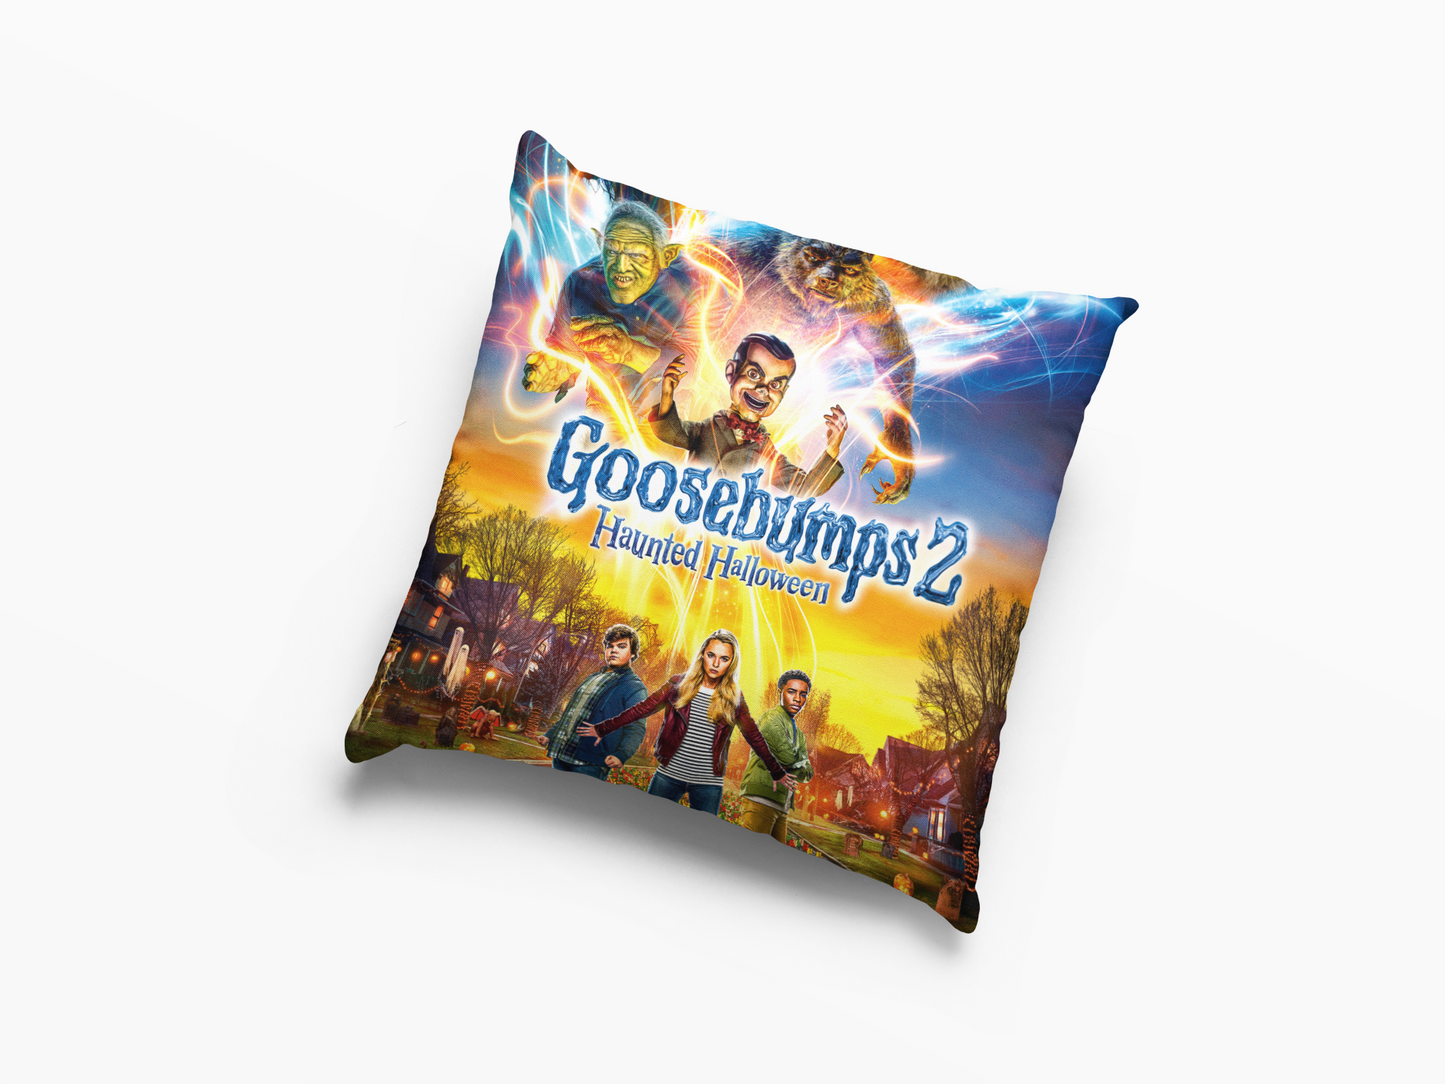 Goosebumps 2 Haunted Halloween 2018 Cushion Case / Pillow Case